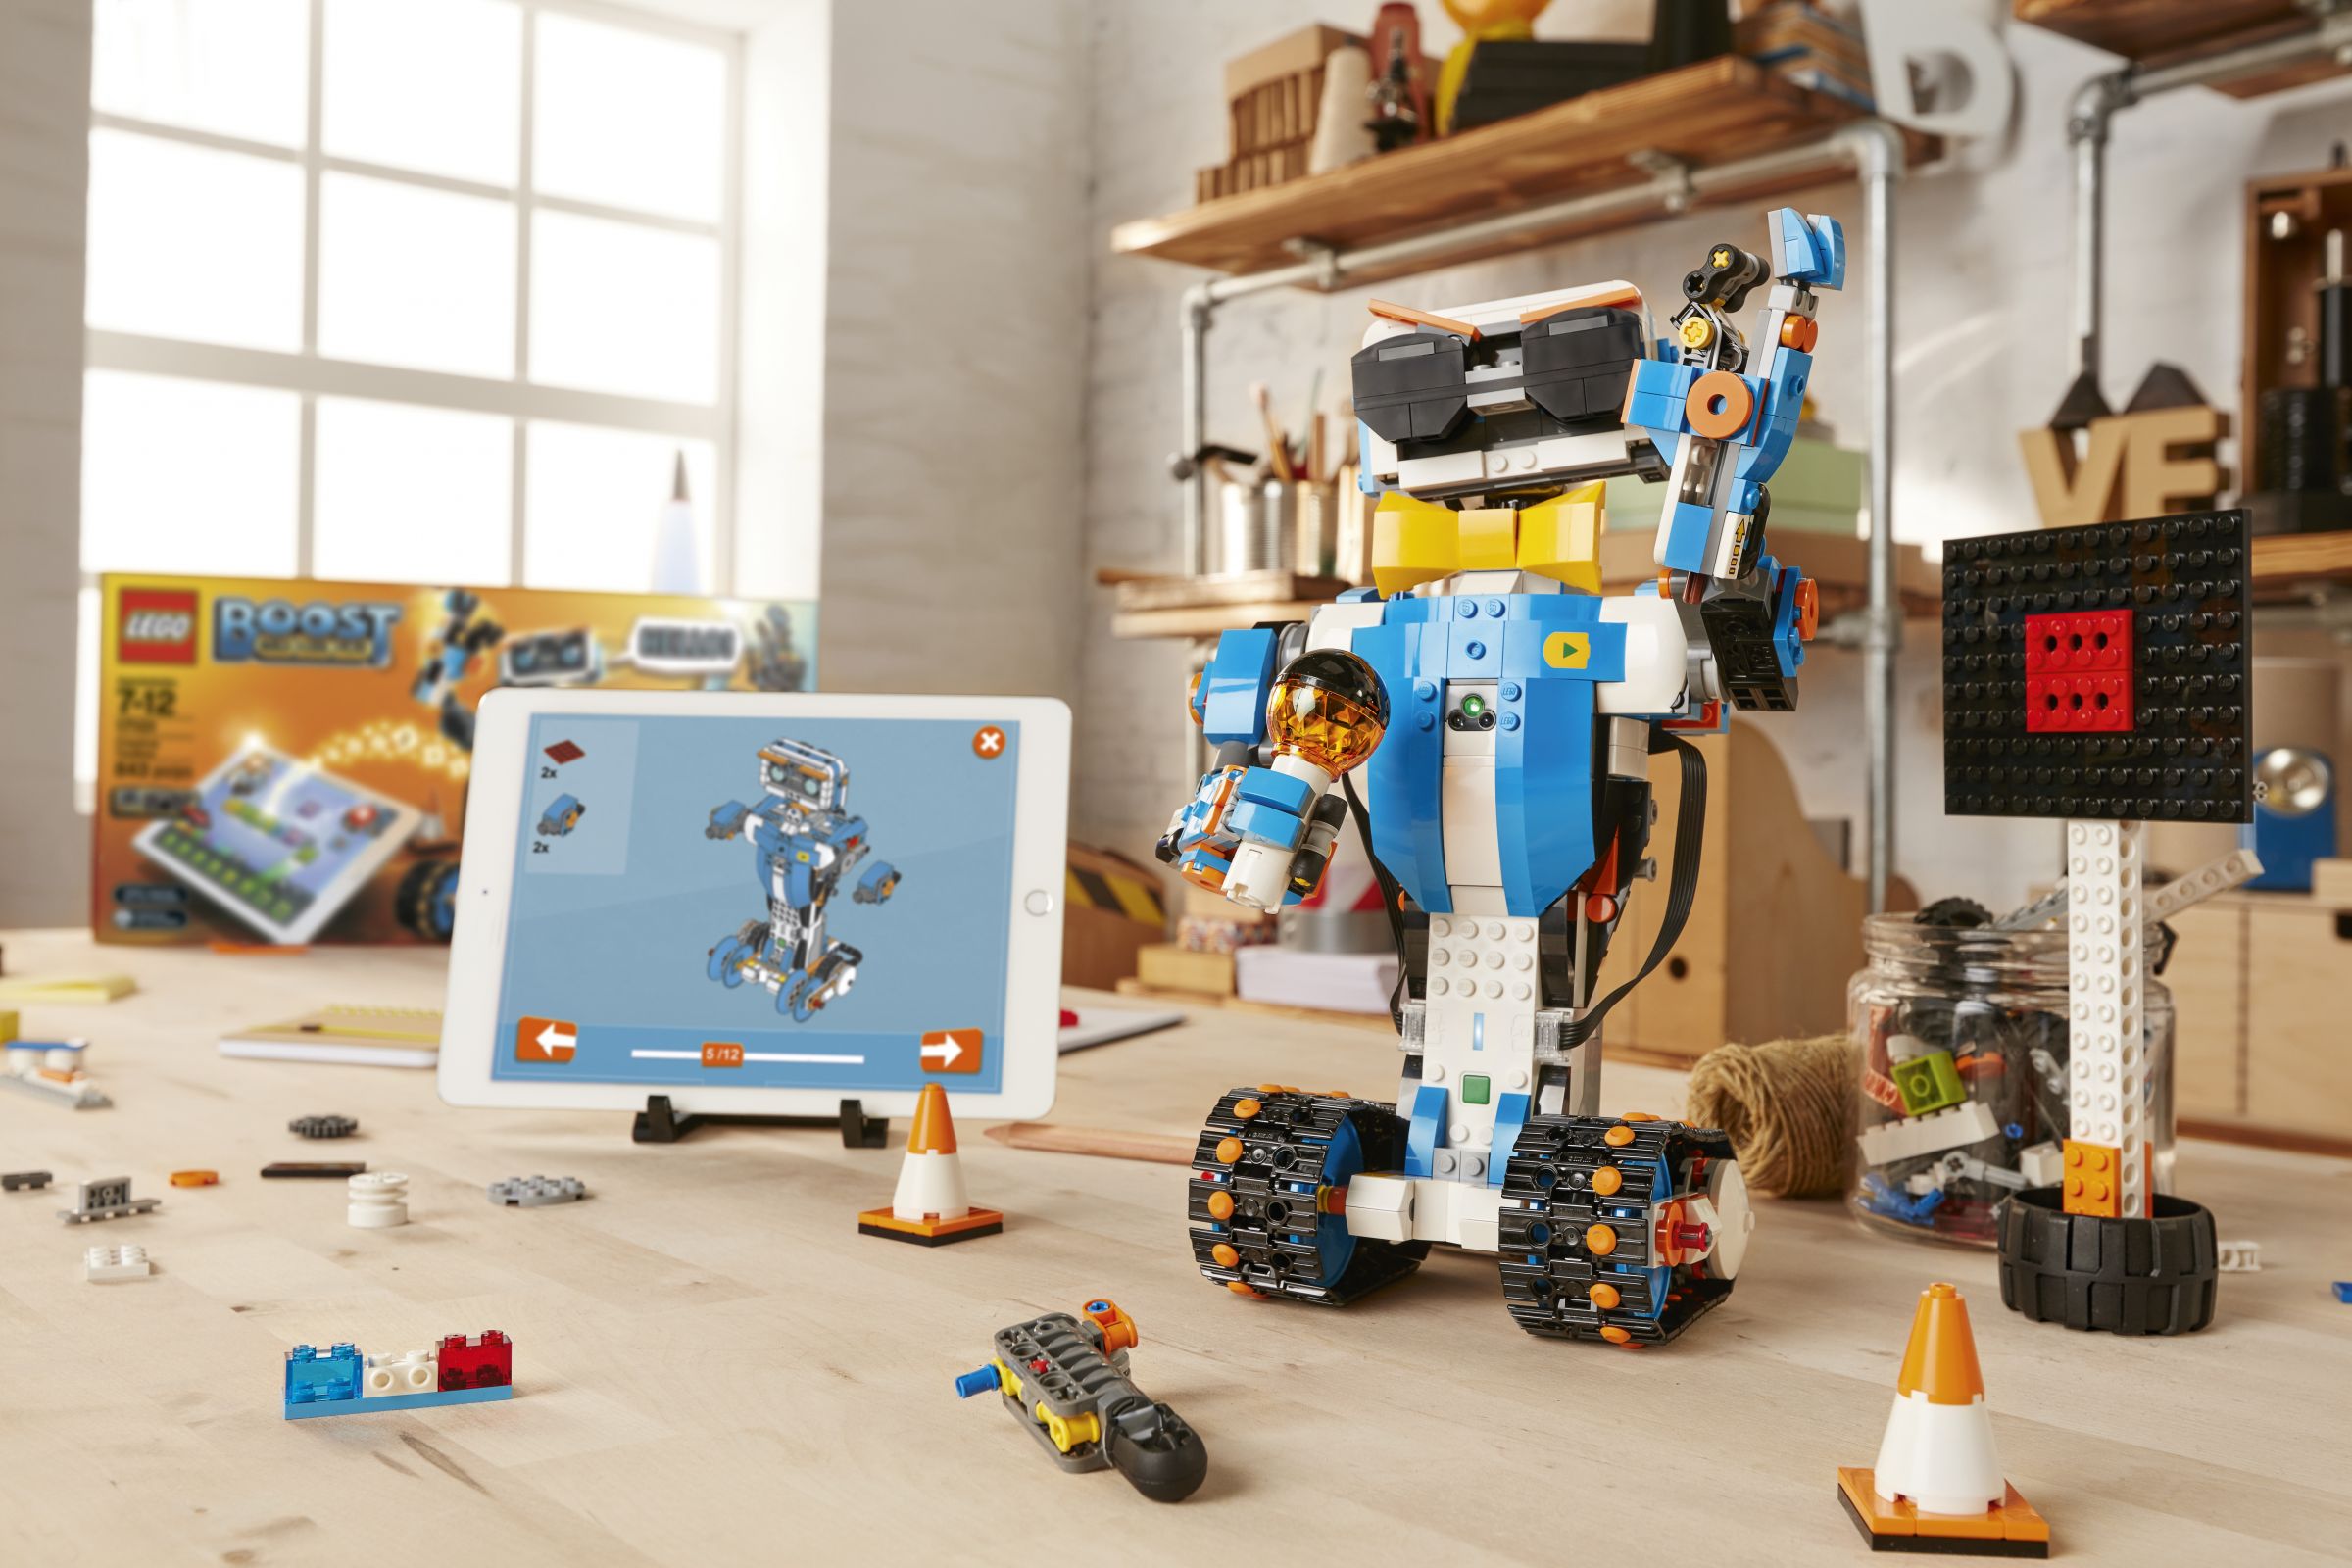 LEGO BOOST 17101 Programmierbares Roboticset LEGO_BOOST_VERNE_ALONE_V039 2.jpg